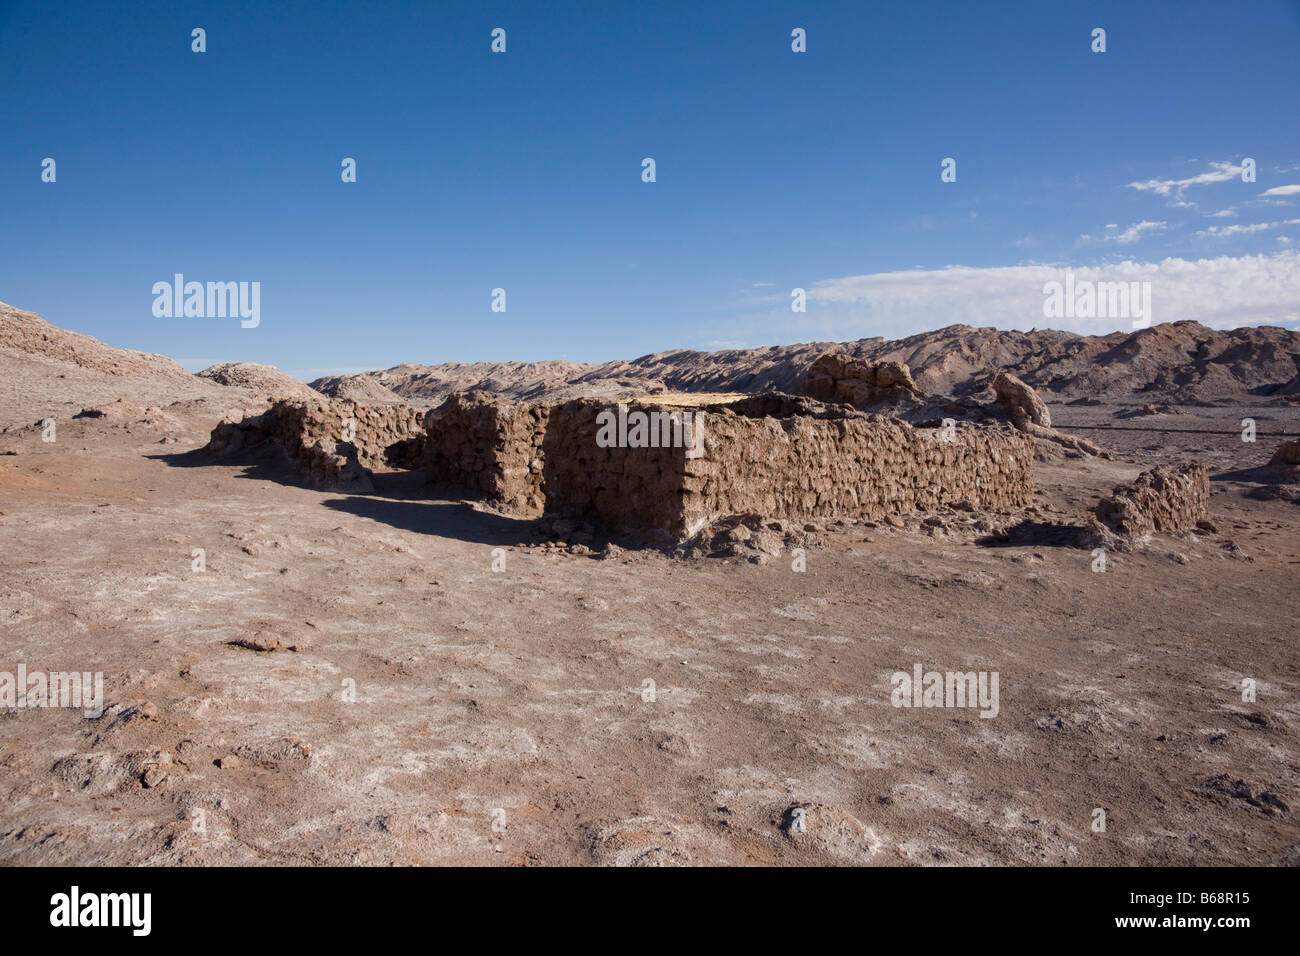 Ruinen von Salz Bergleute Behausungen, Valle De La Luna (Tal des Mondes), Atacama, Chile Stockfoto